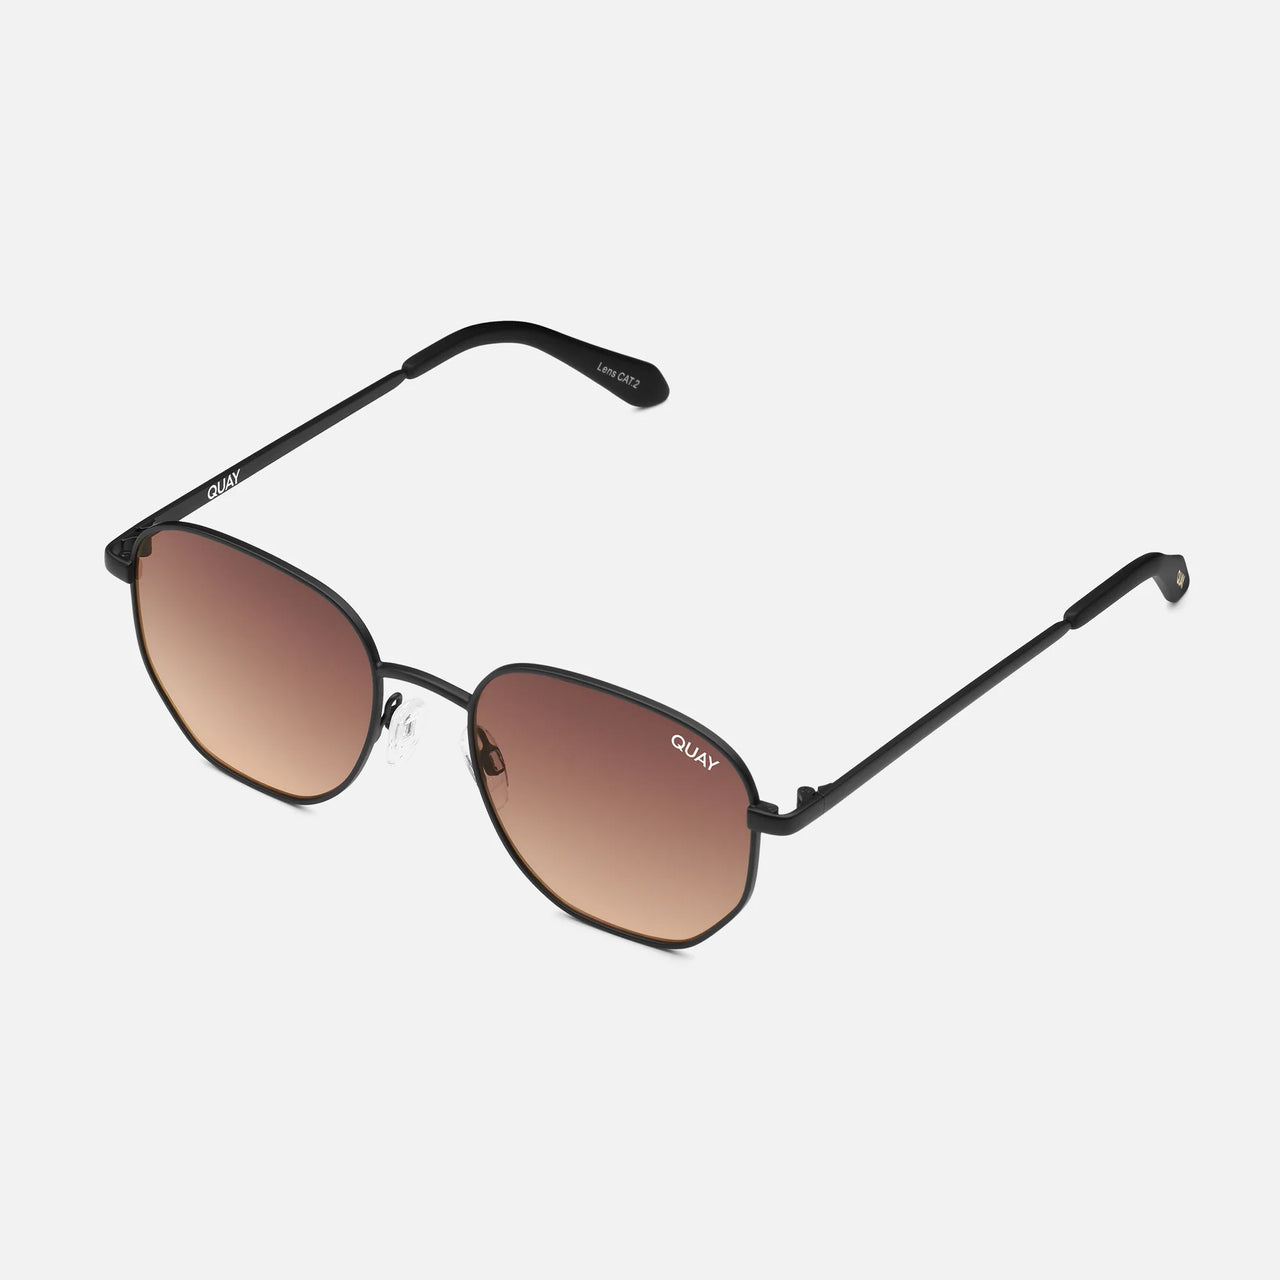 Big Time Black/Brown To Orange Sunglasses, Sunglasses by Quay | LIT Boutique